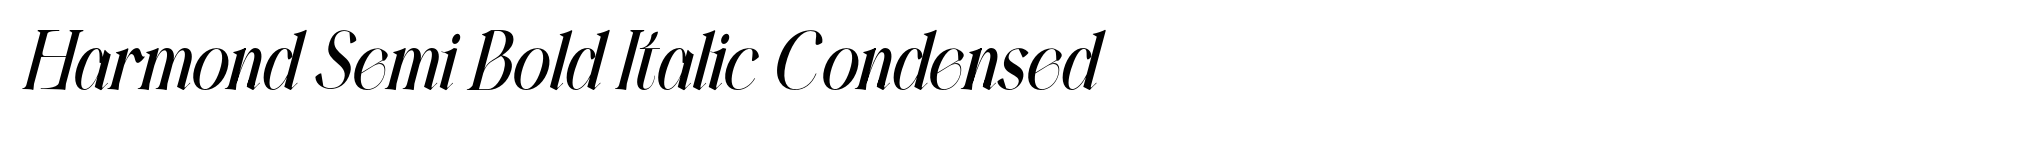 Harmond Semi Bold Italic Condensed image